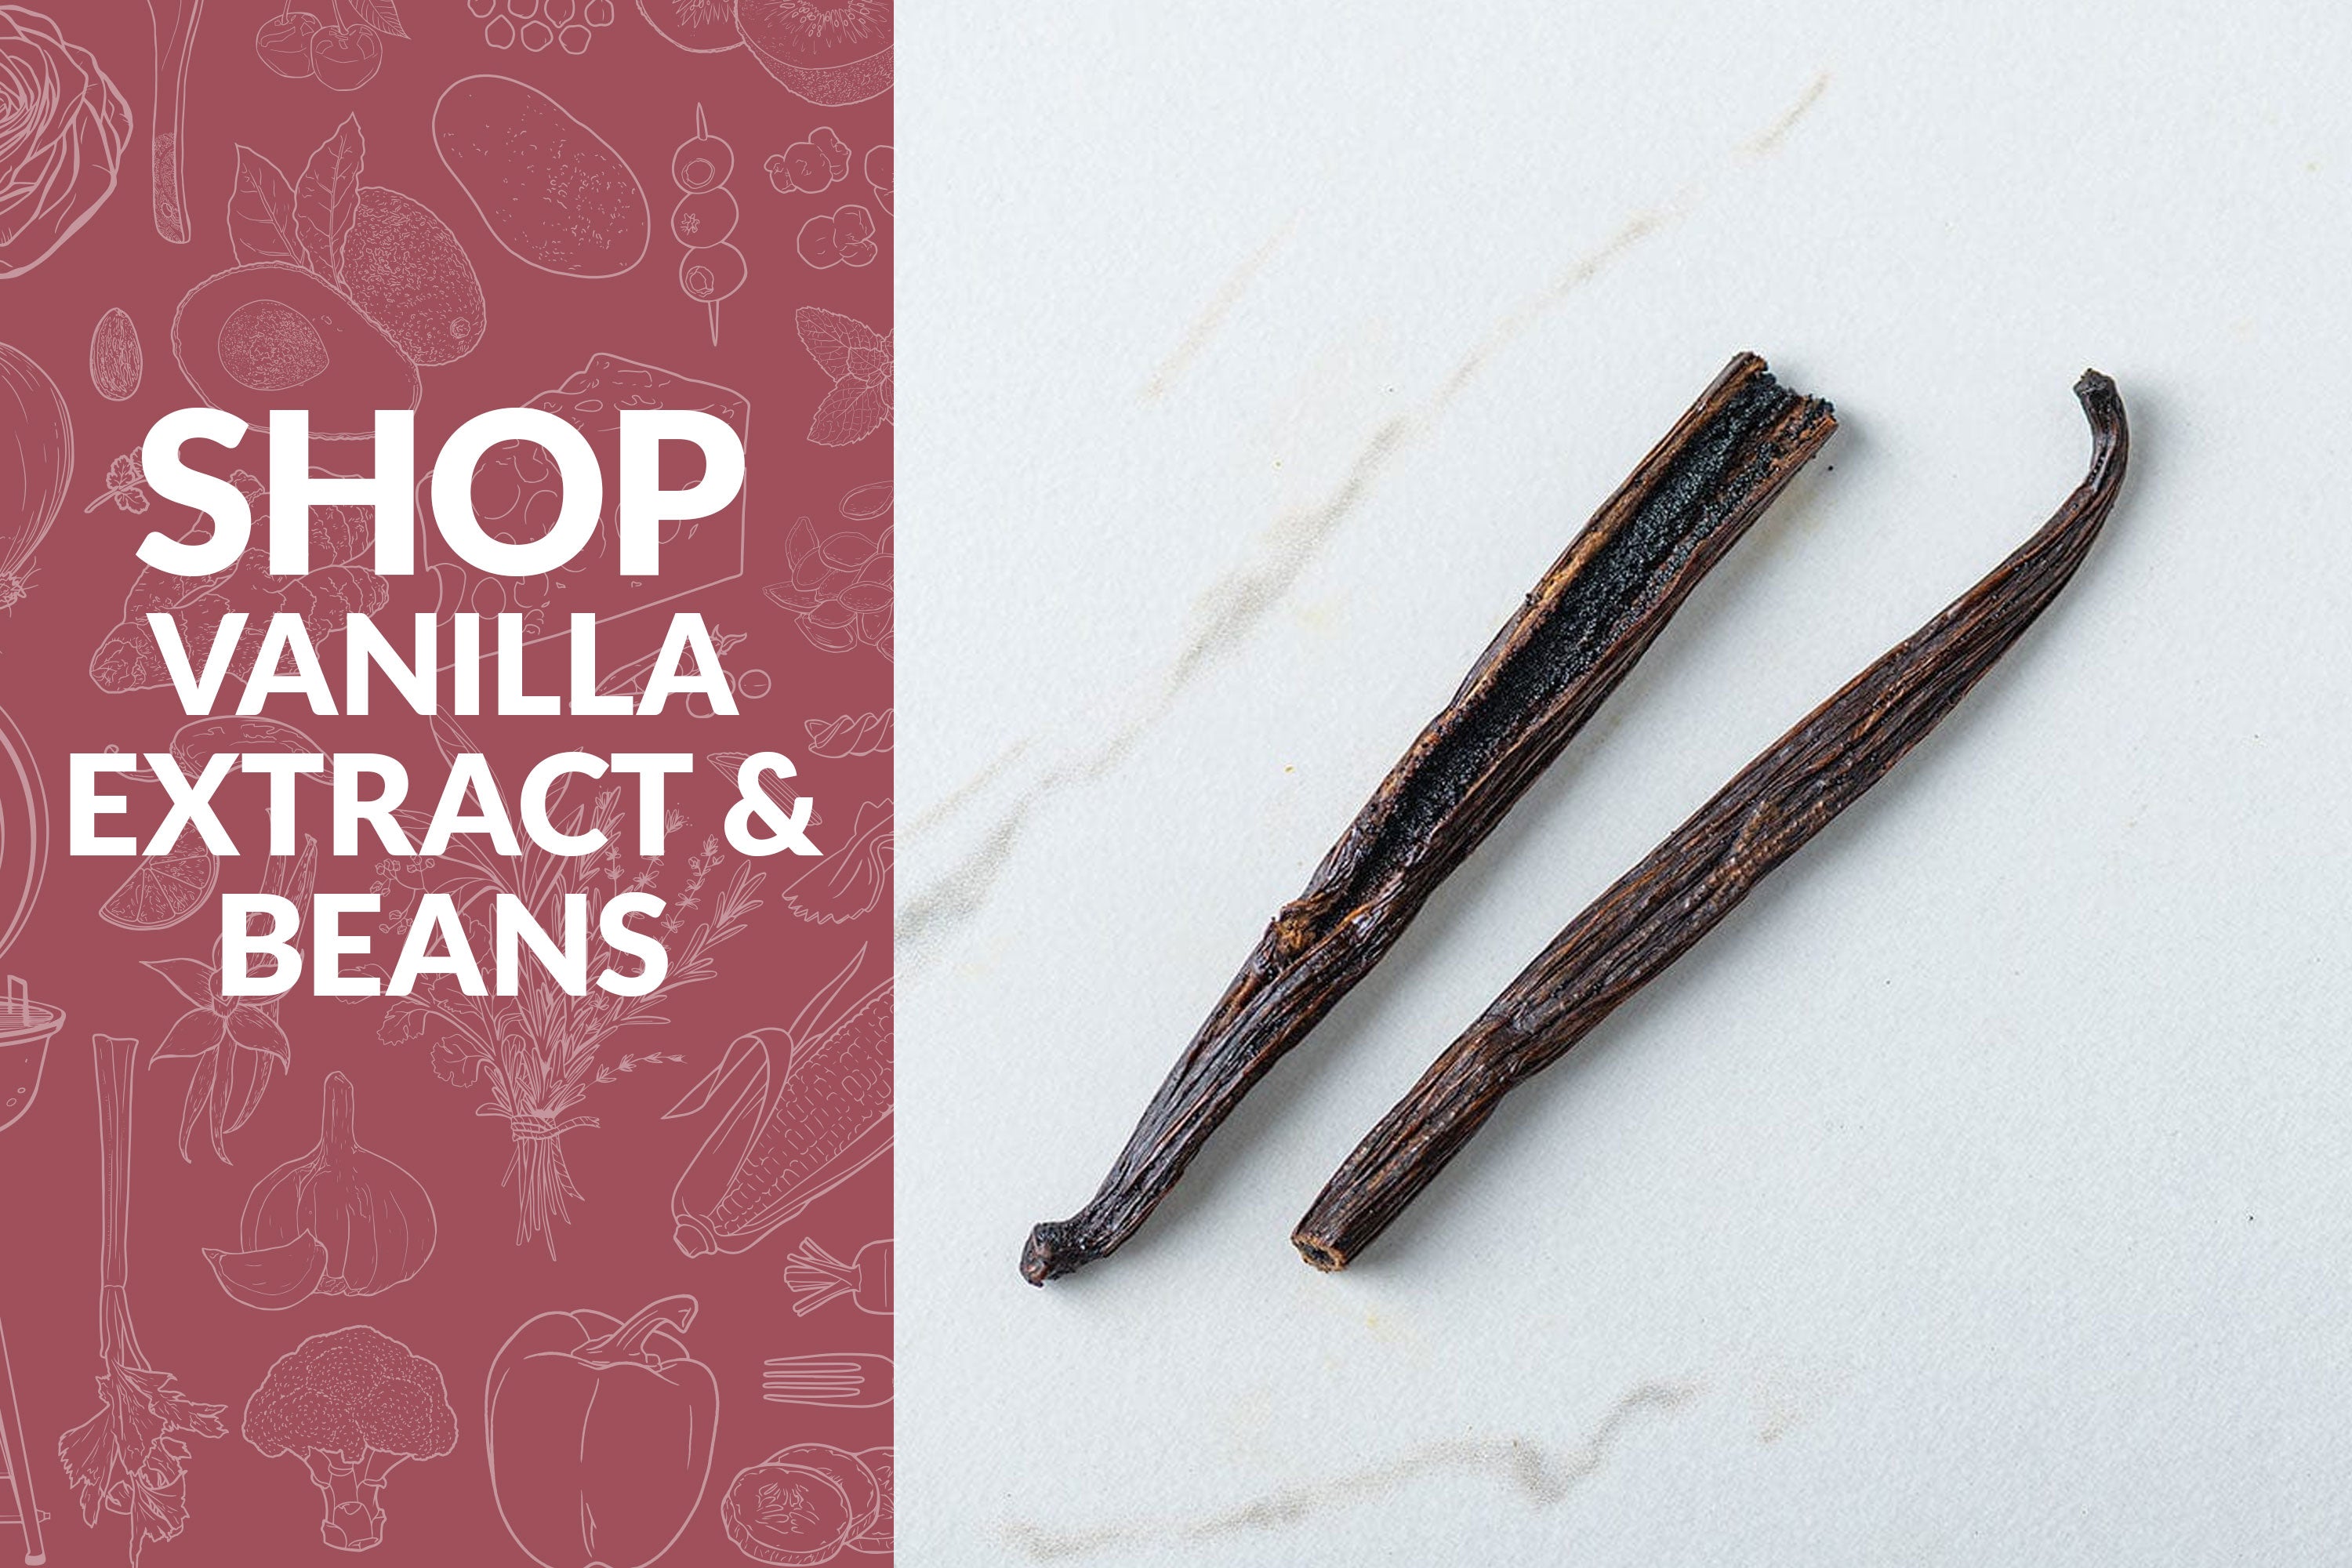 Shop Vanilla Extract & Beans on left with vanilla beans on right